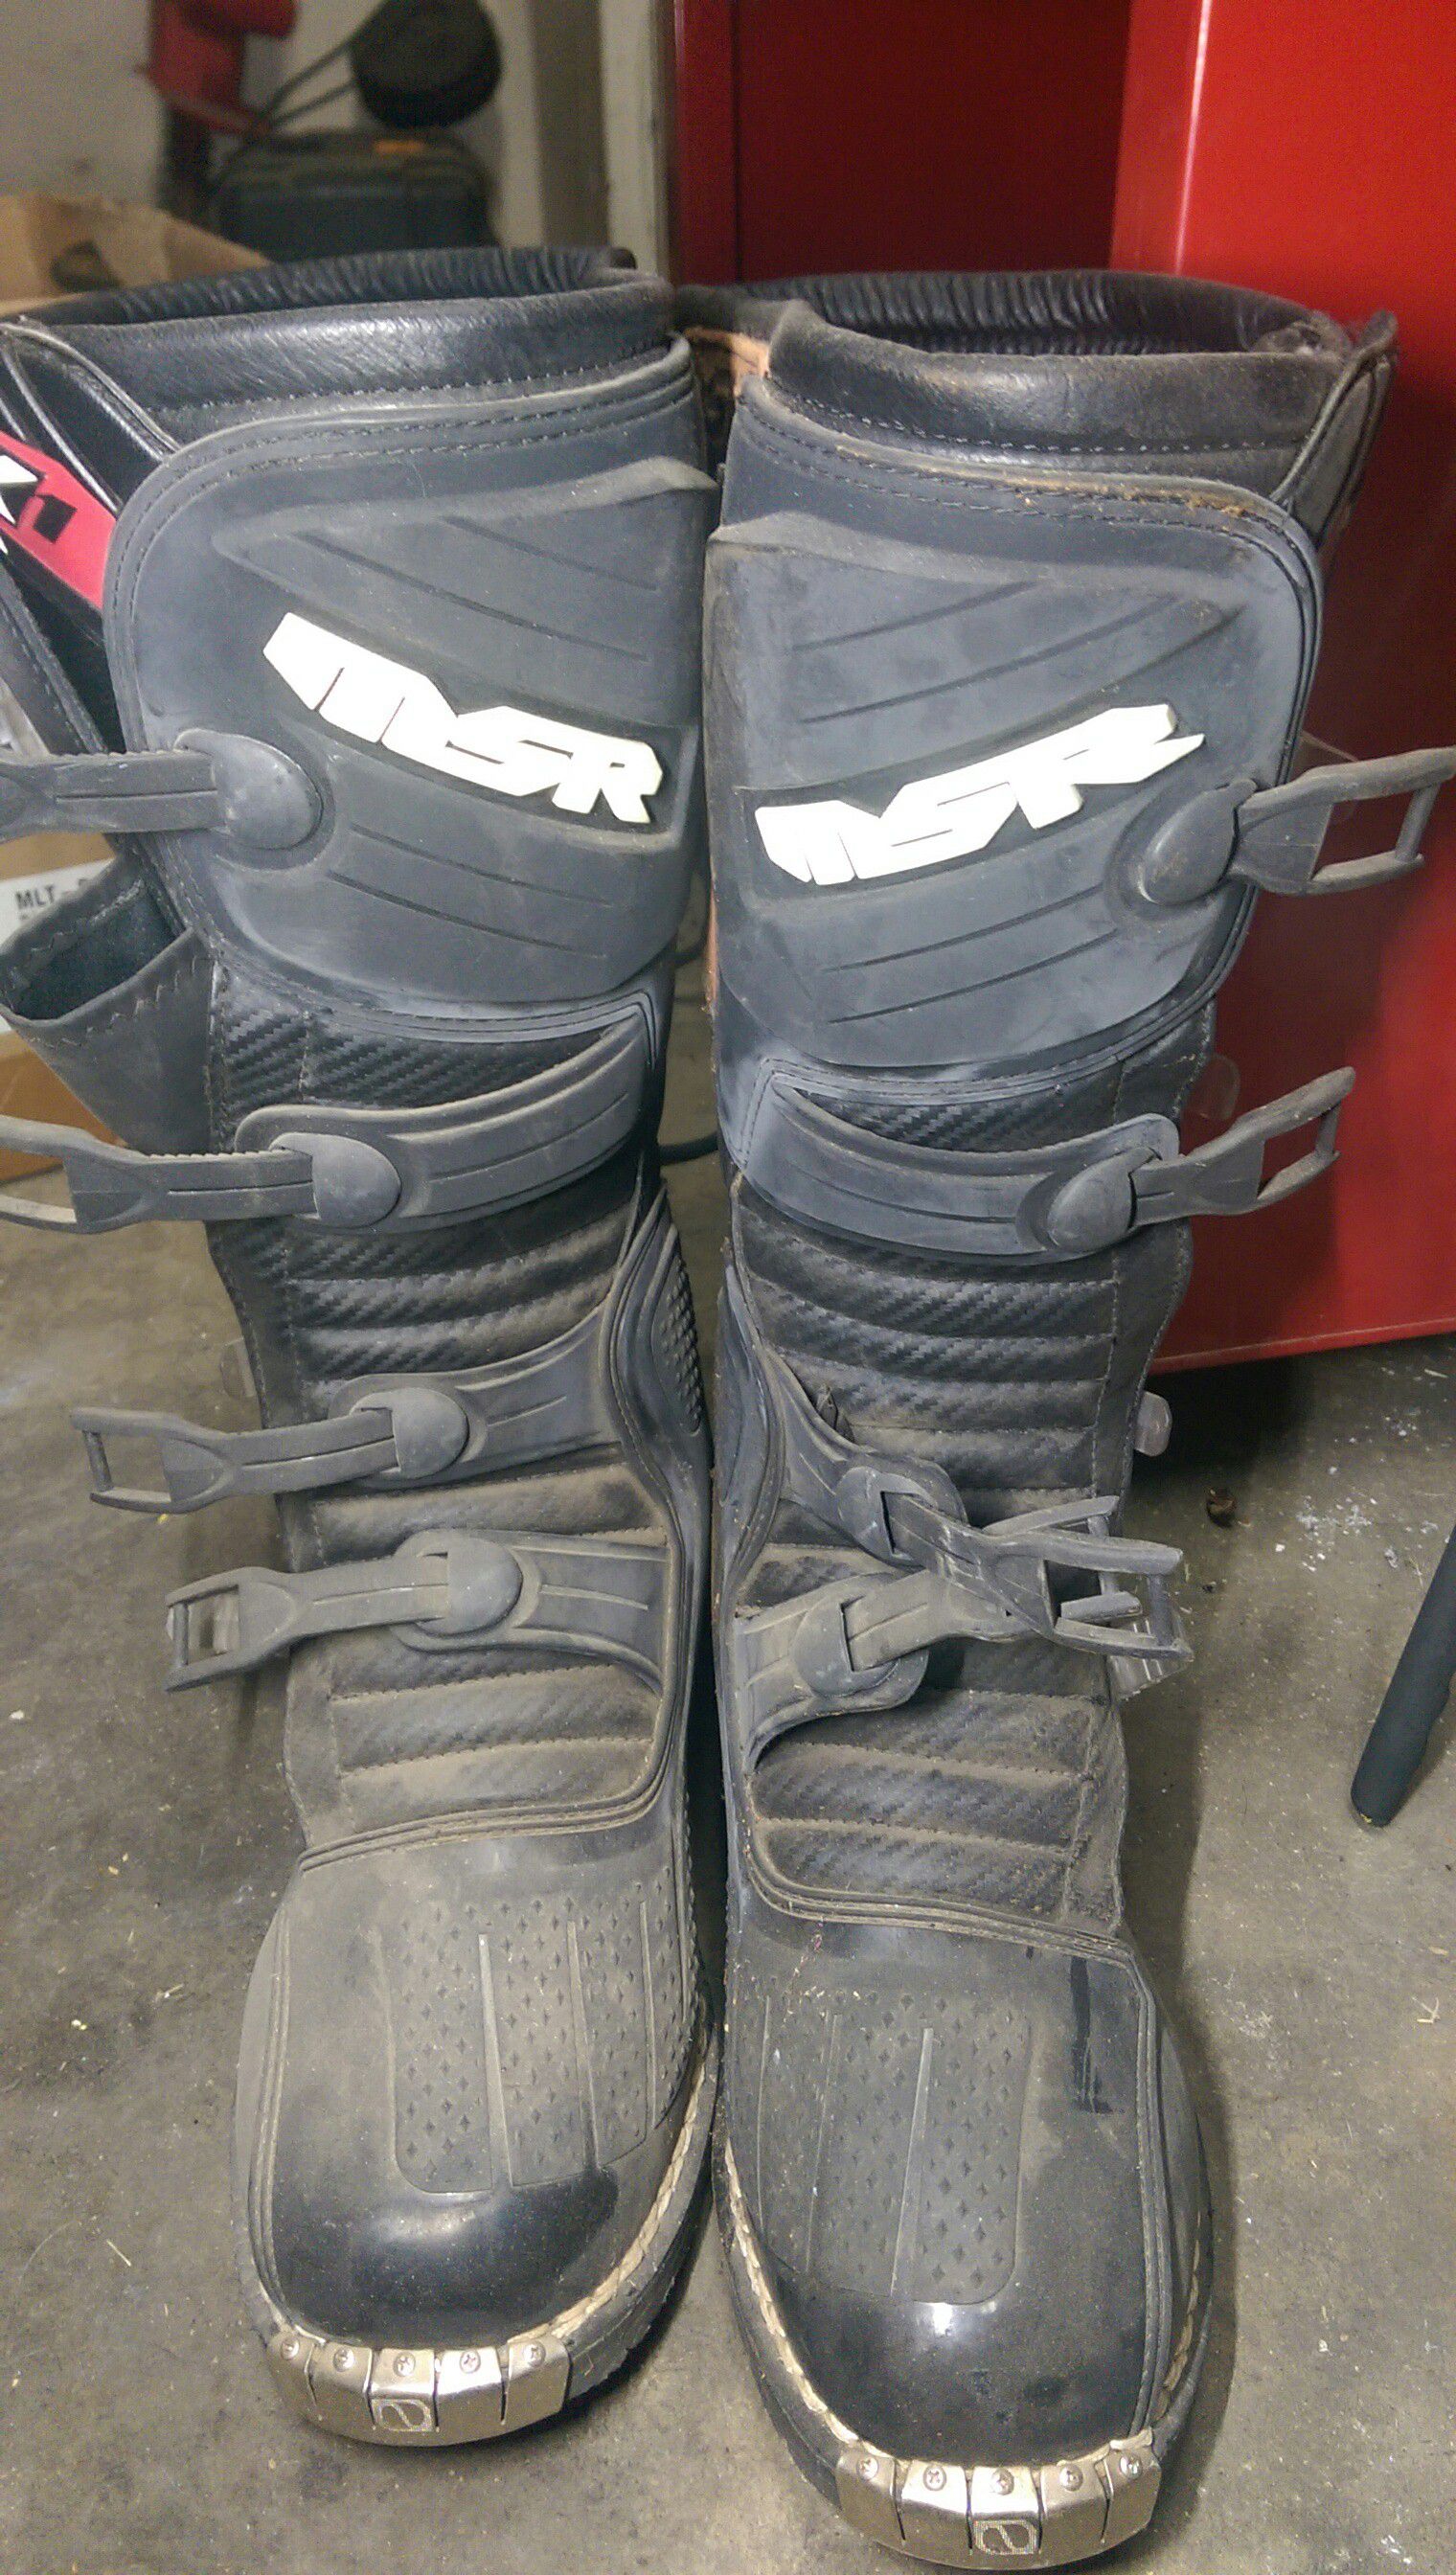 Msr dirt bike boots